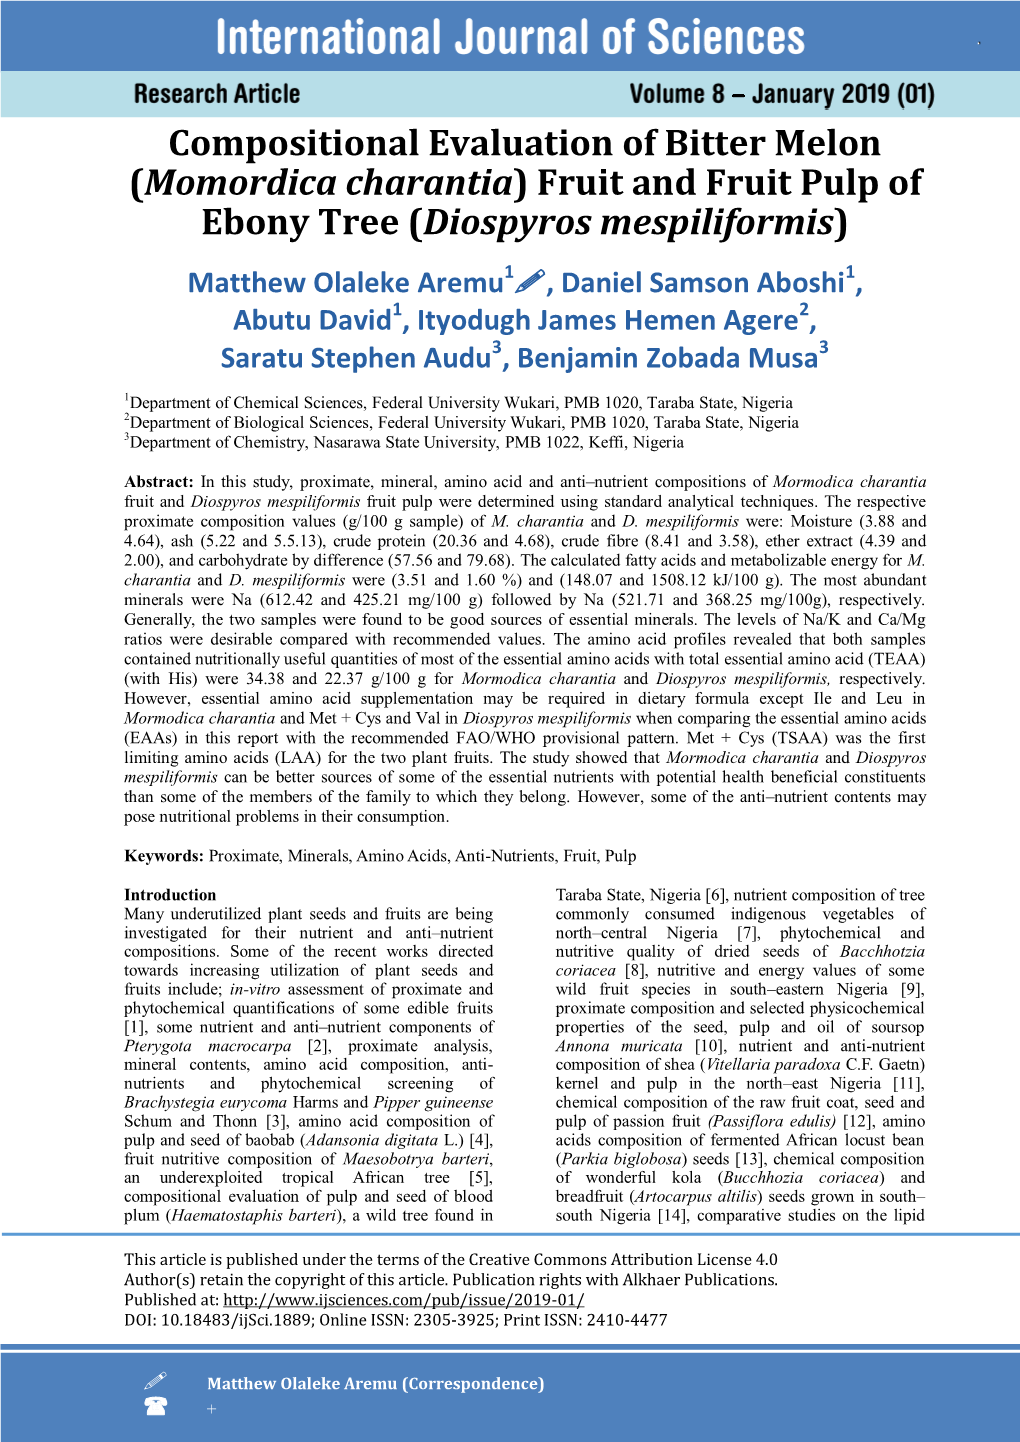 Fruit and Fruit Pulp of Ebony Tree (Diospyros Mespiliformis)